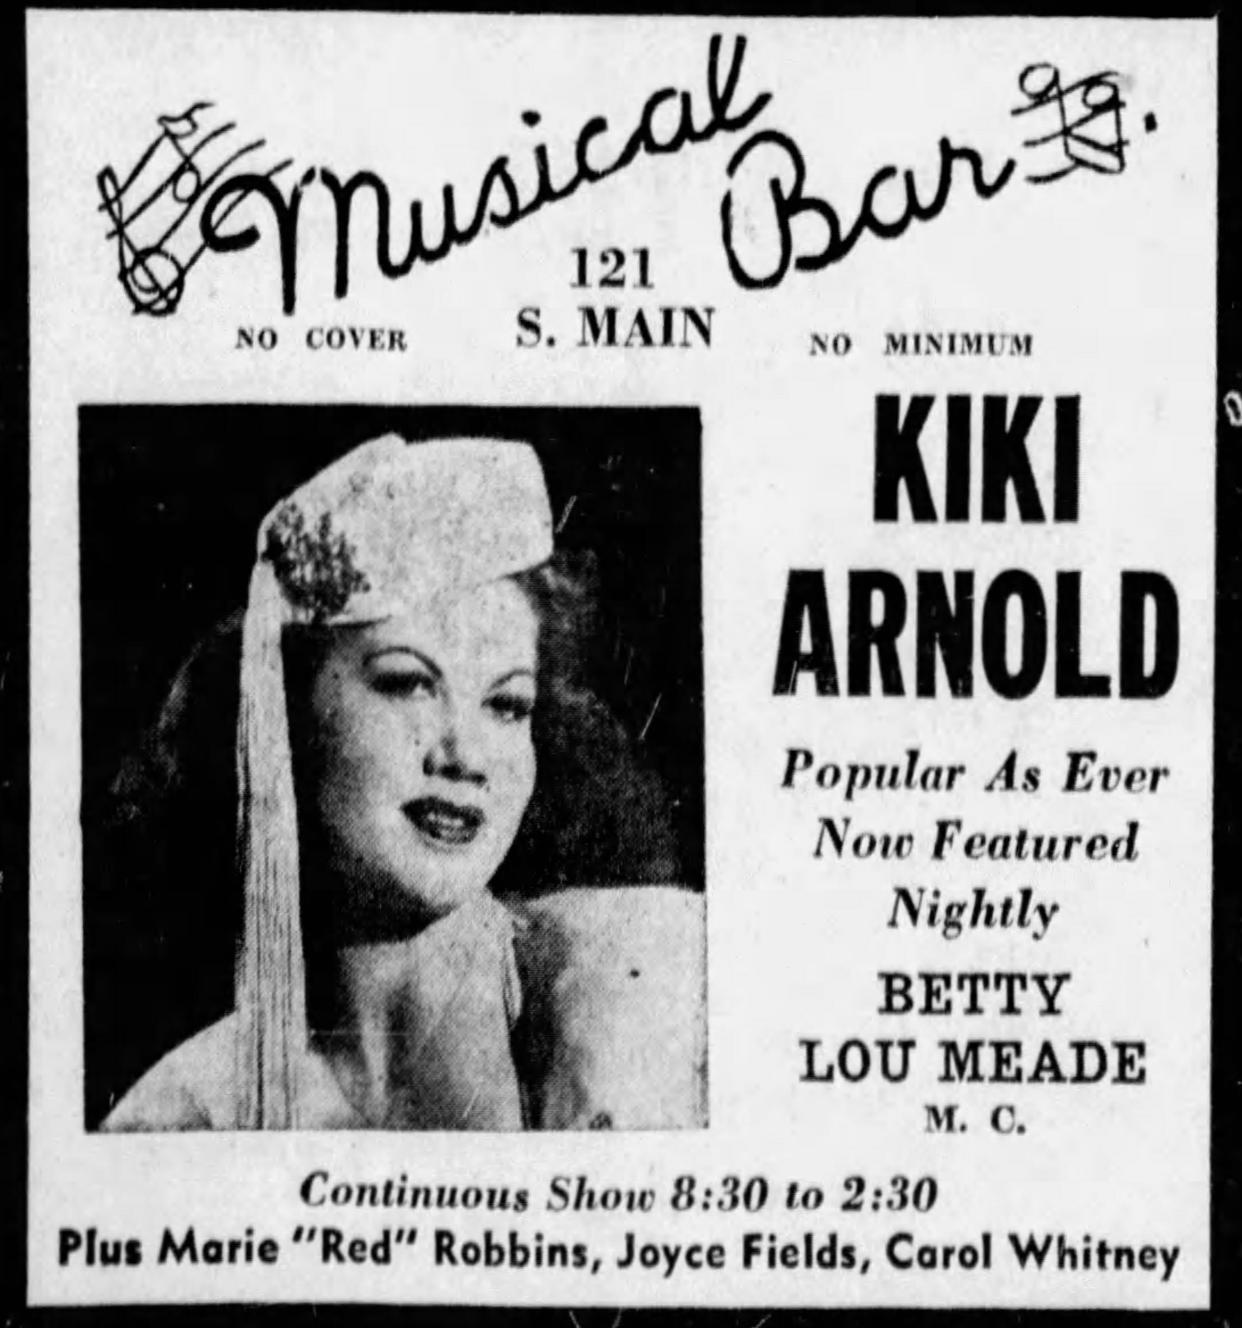 Akron burlesque star Kiki Arnold headlines the Musical Bar in 1948.